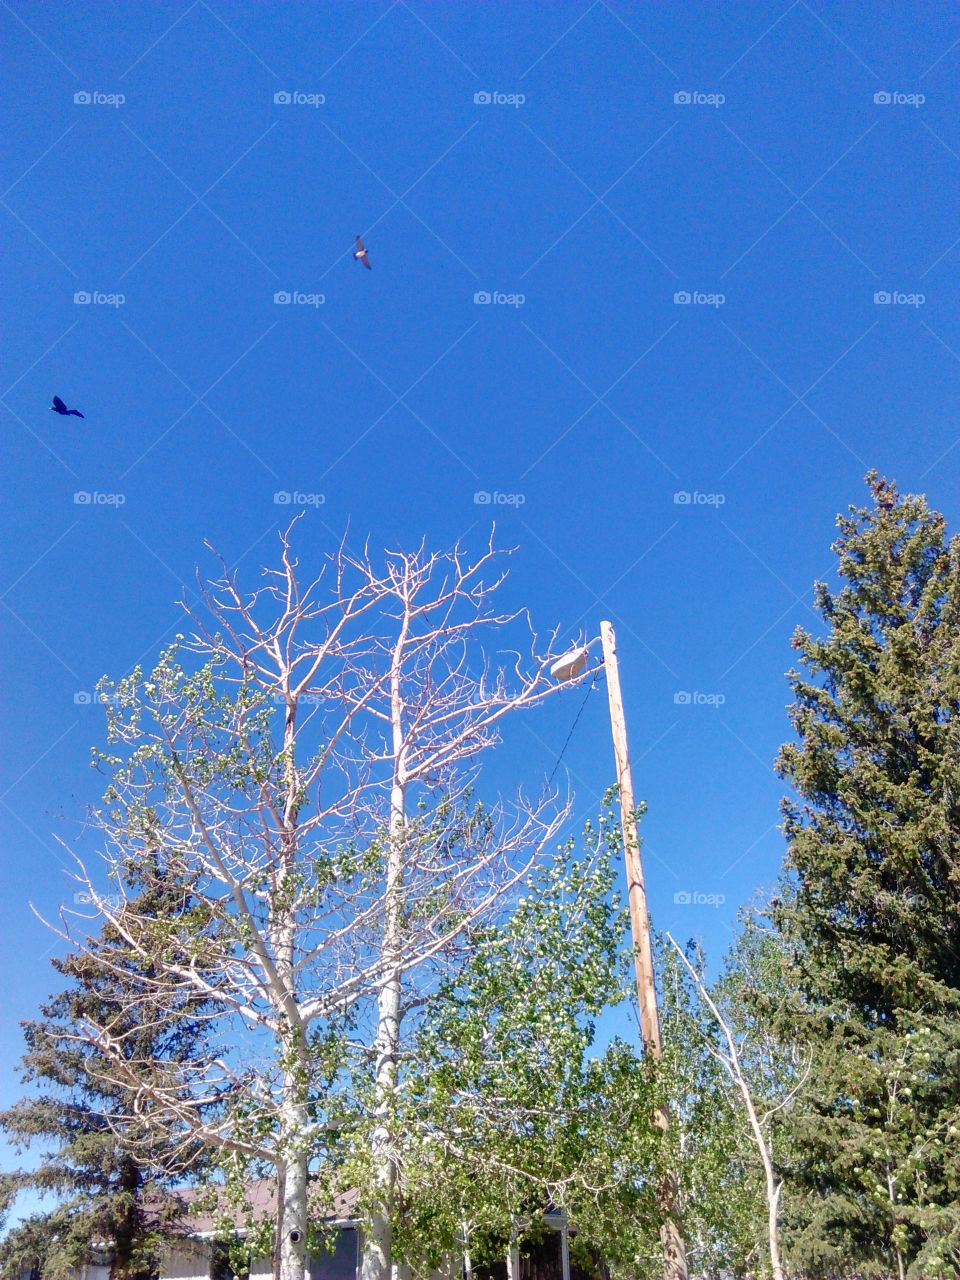 Birds flying in the sky Aspen tree plus others.